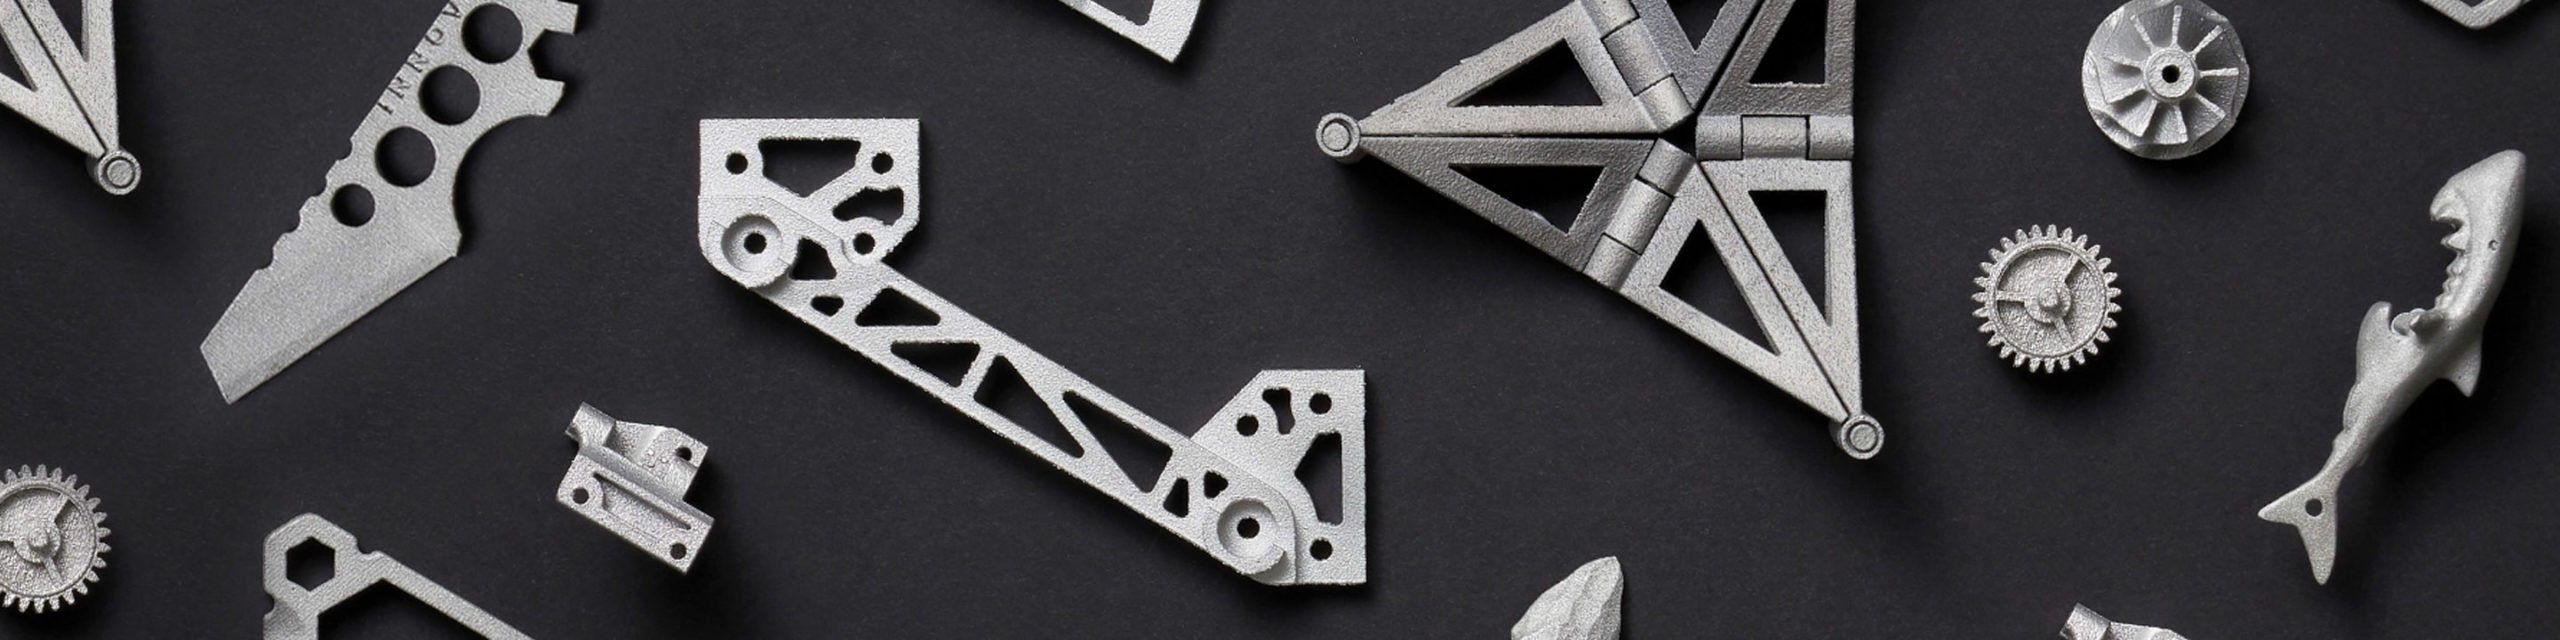 Aluminum 3D Printing - 3D Printed with Aluminum - Shapeways